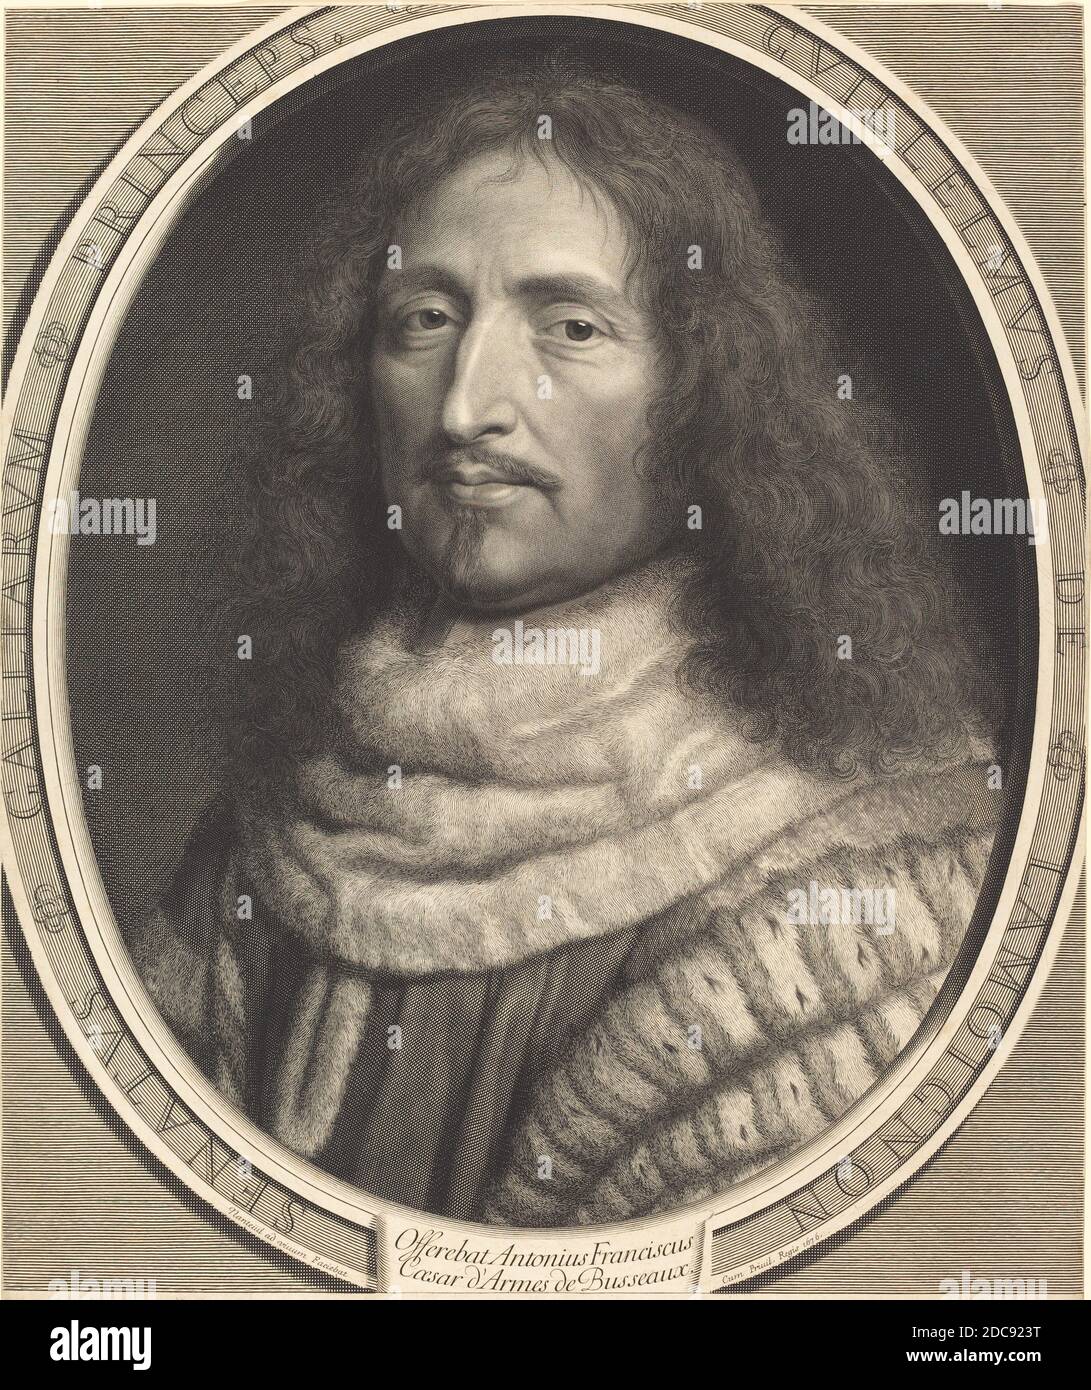 Robert Nanteuil, (artist), French, 1623 - 1678, Guillaume de Lamoignon, 1676, engraving Stock Photo